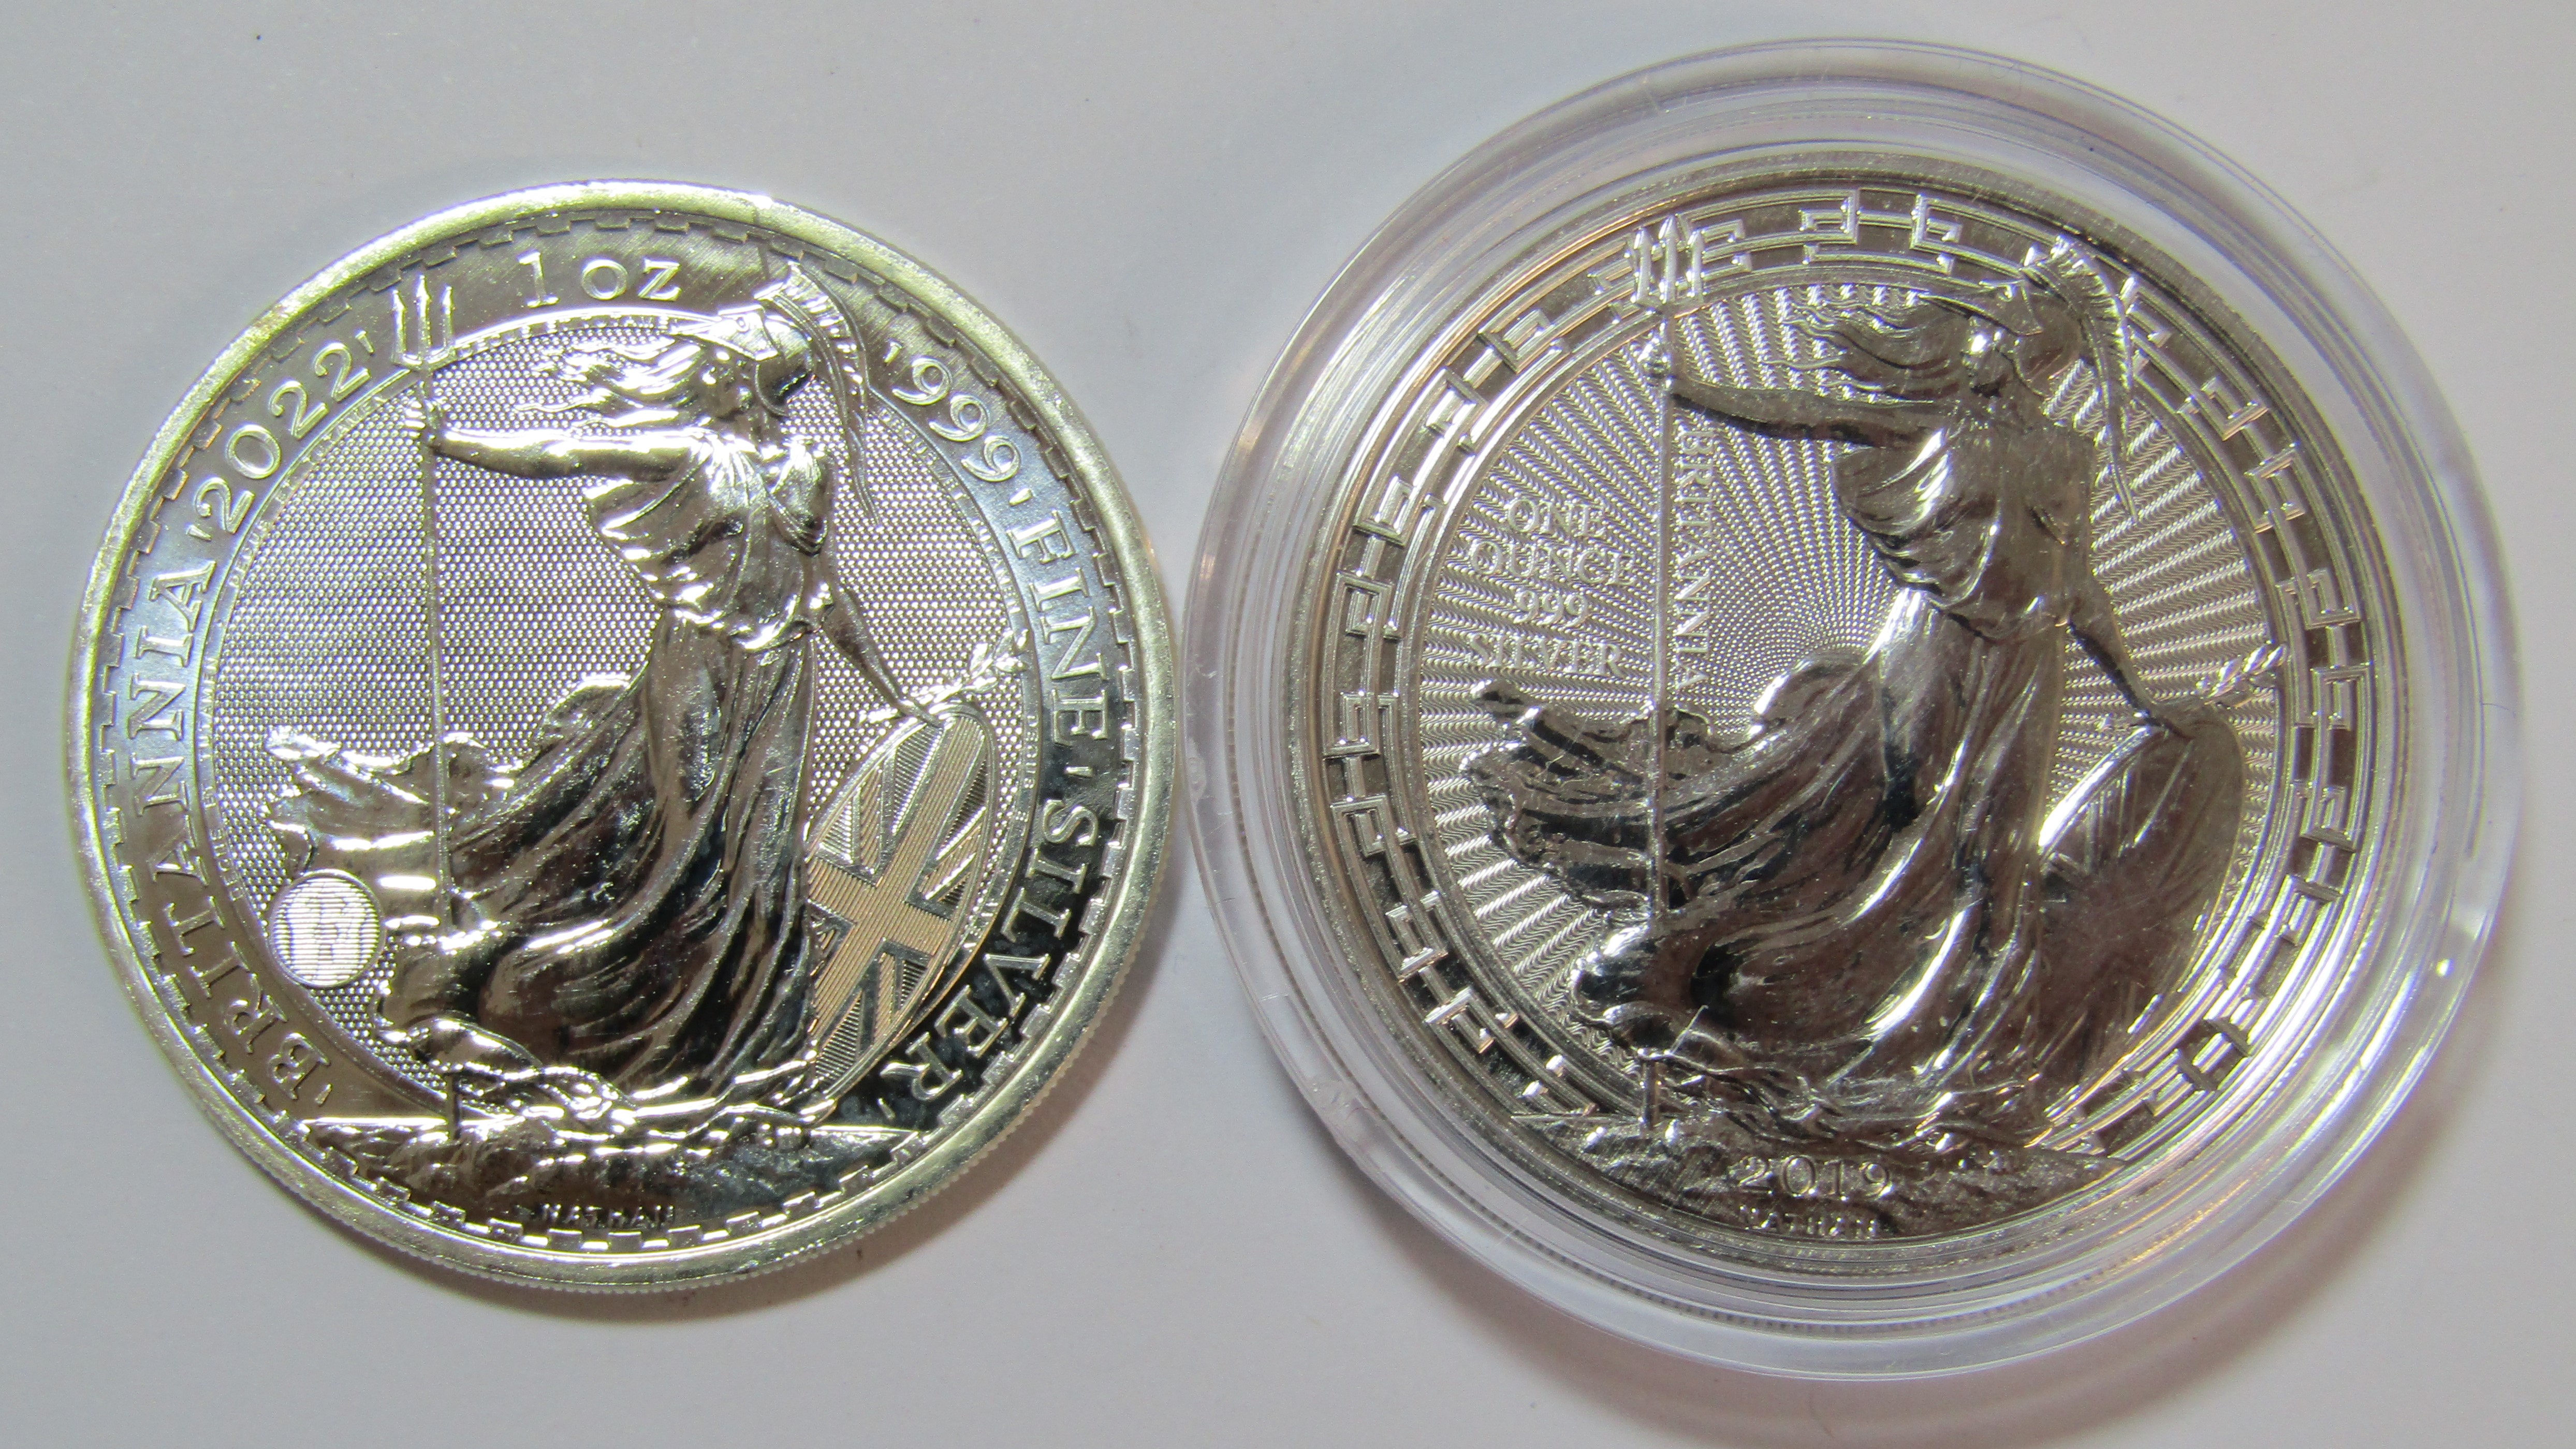 2 x 1oz fine silver coins - 2019 & 2022 Britannia 2 pounds - Image 2 of 2